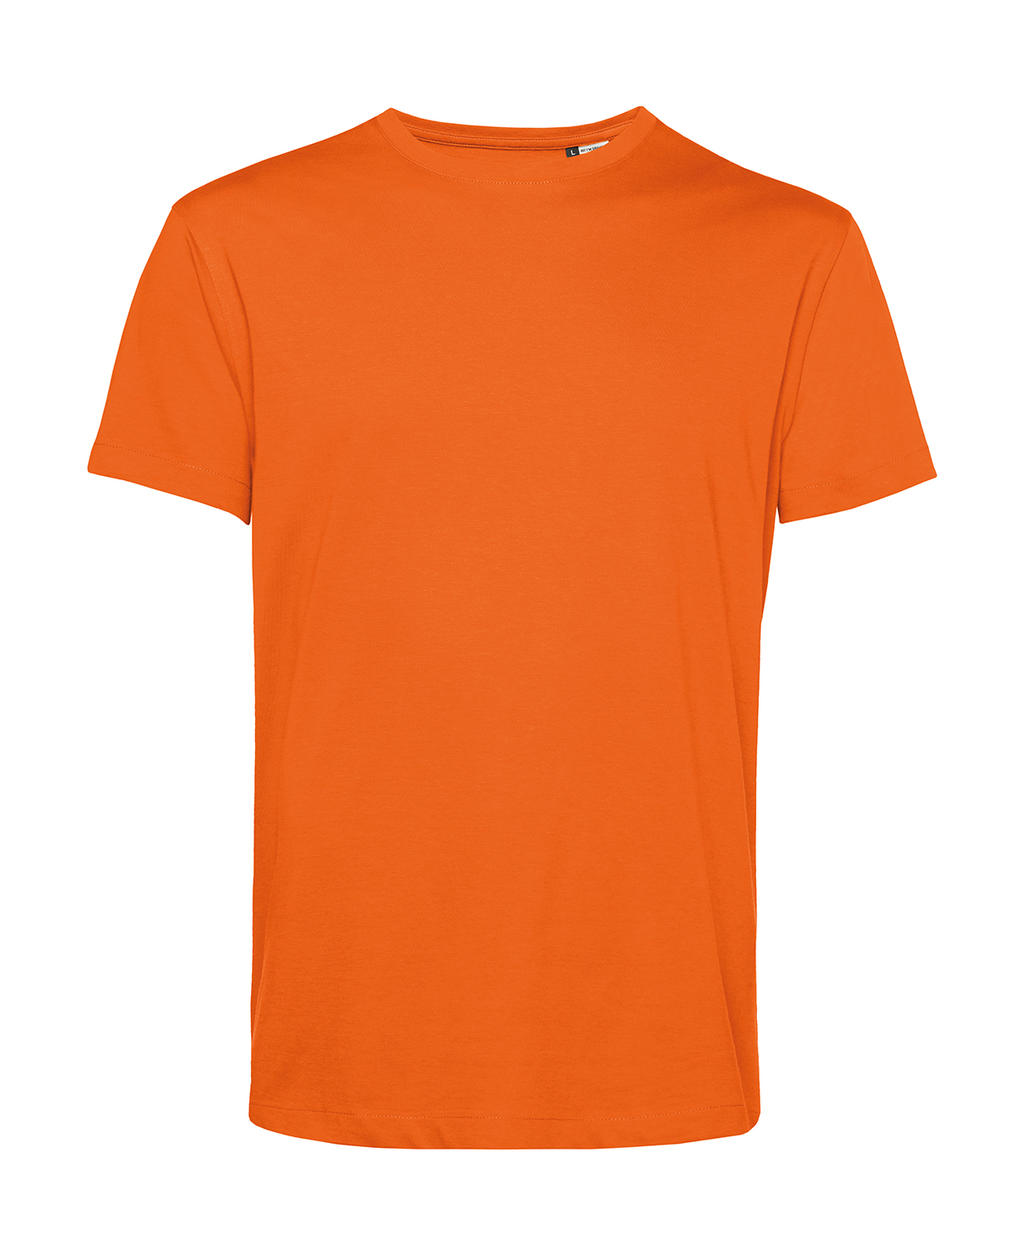 Tričko BC Organic Inspire E150 - oranžové, L